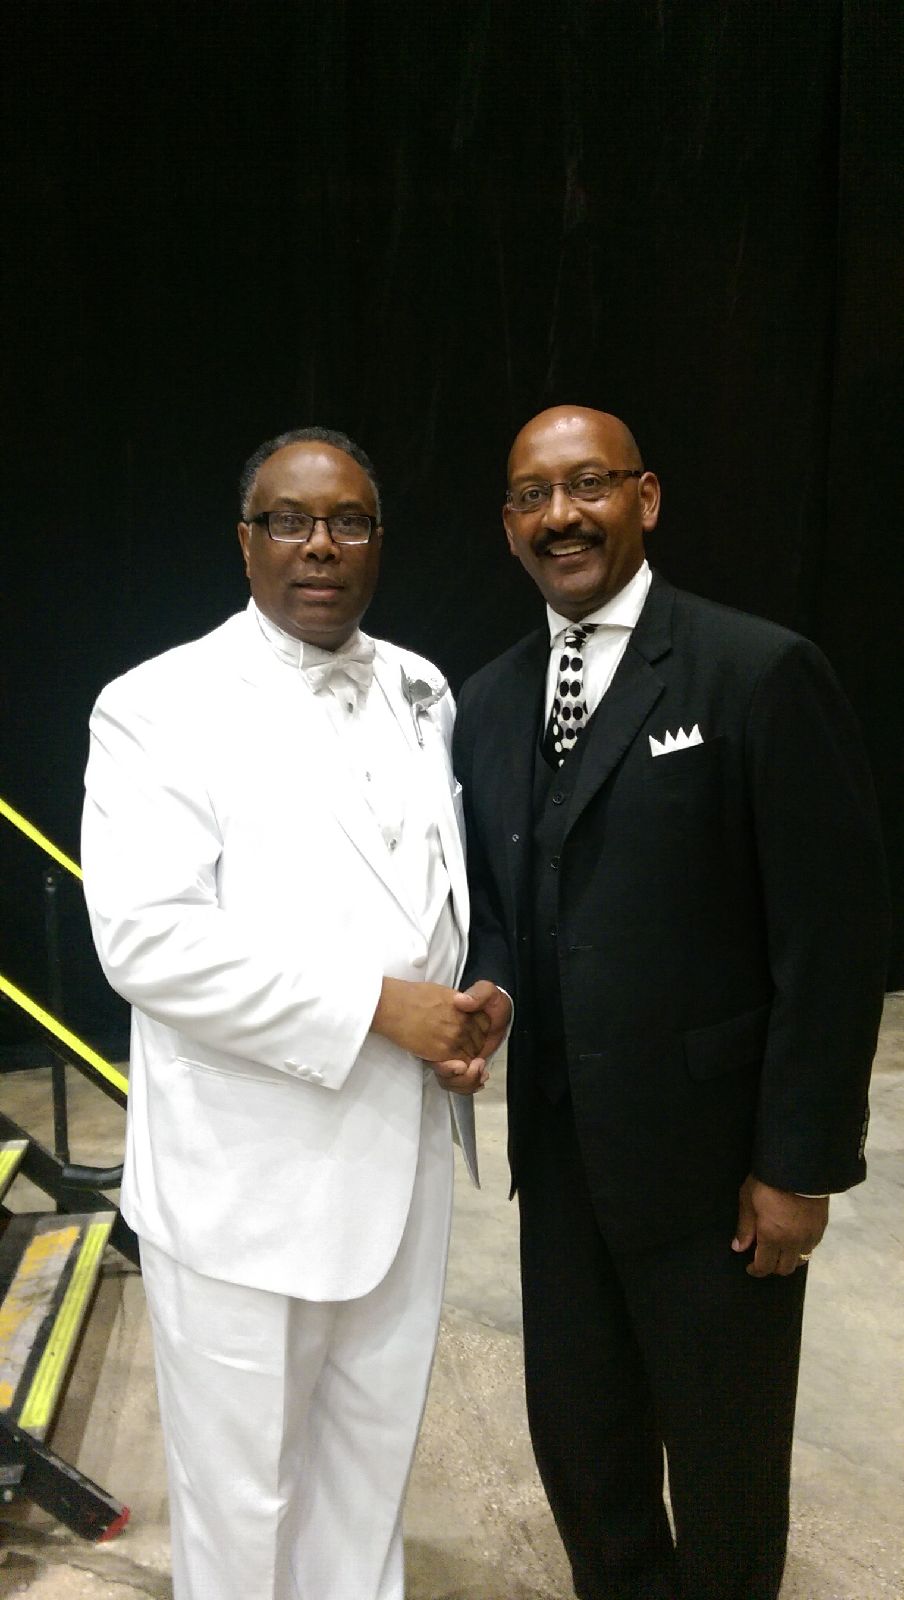 Pastor Alexander with the President of the National Baptist Convention of America International, Inc., Dr. Samuel C. Tolbert Jr.